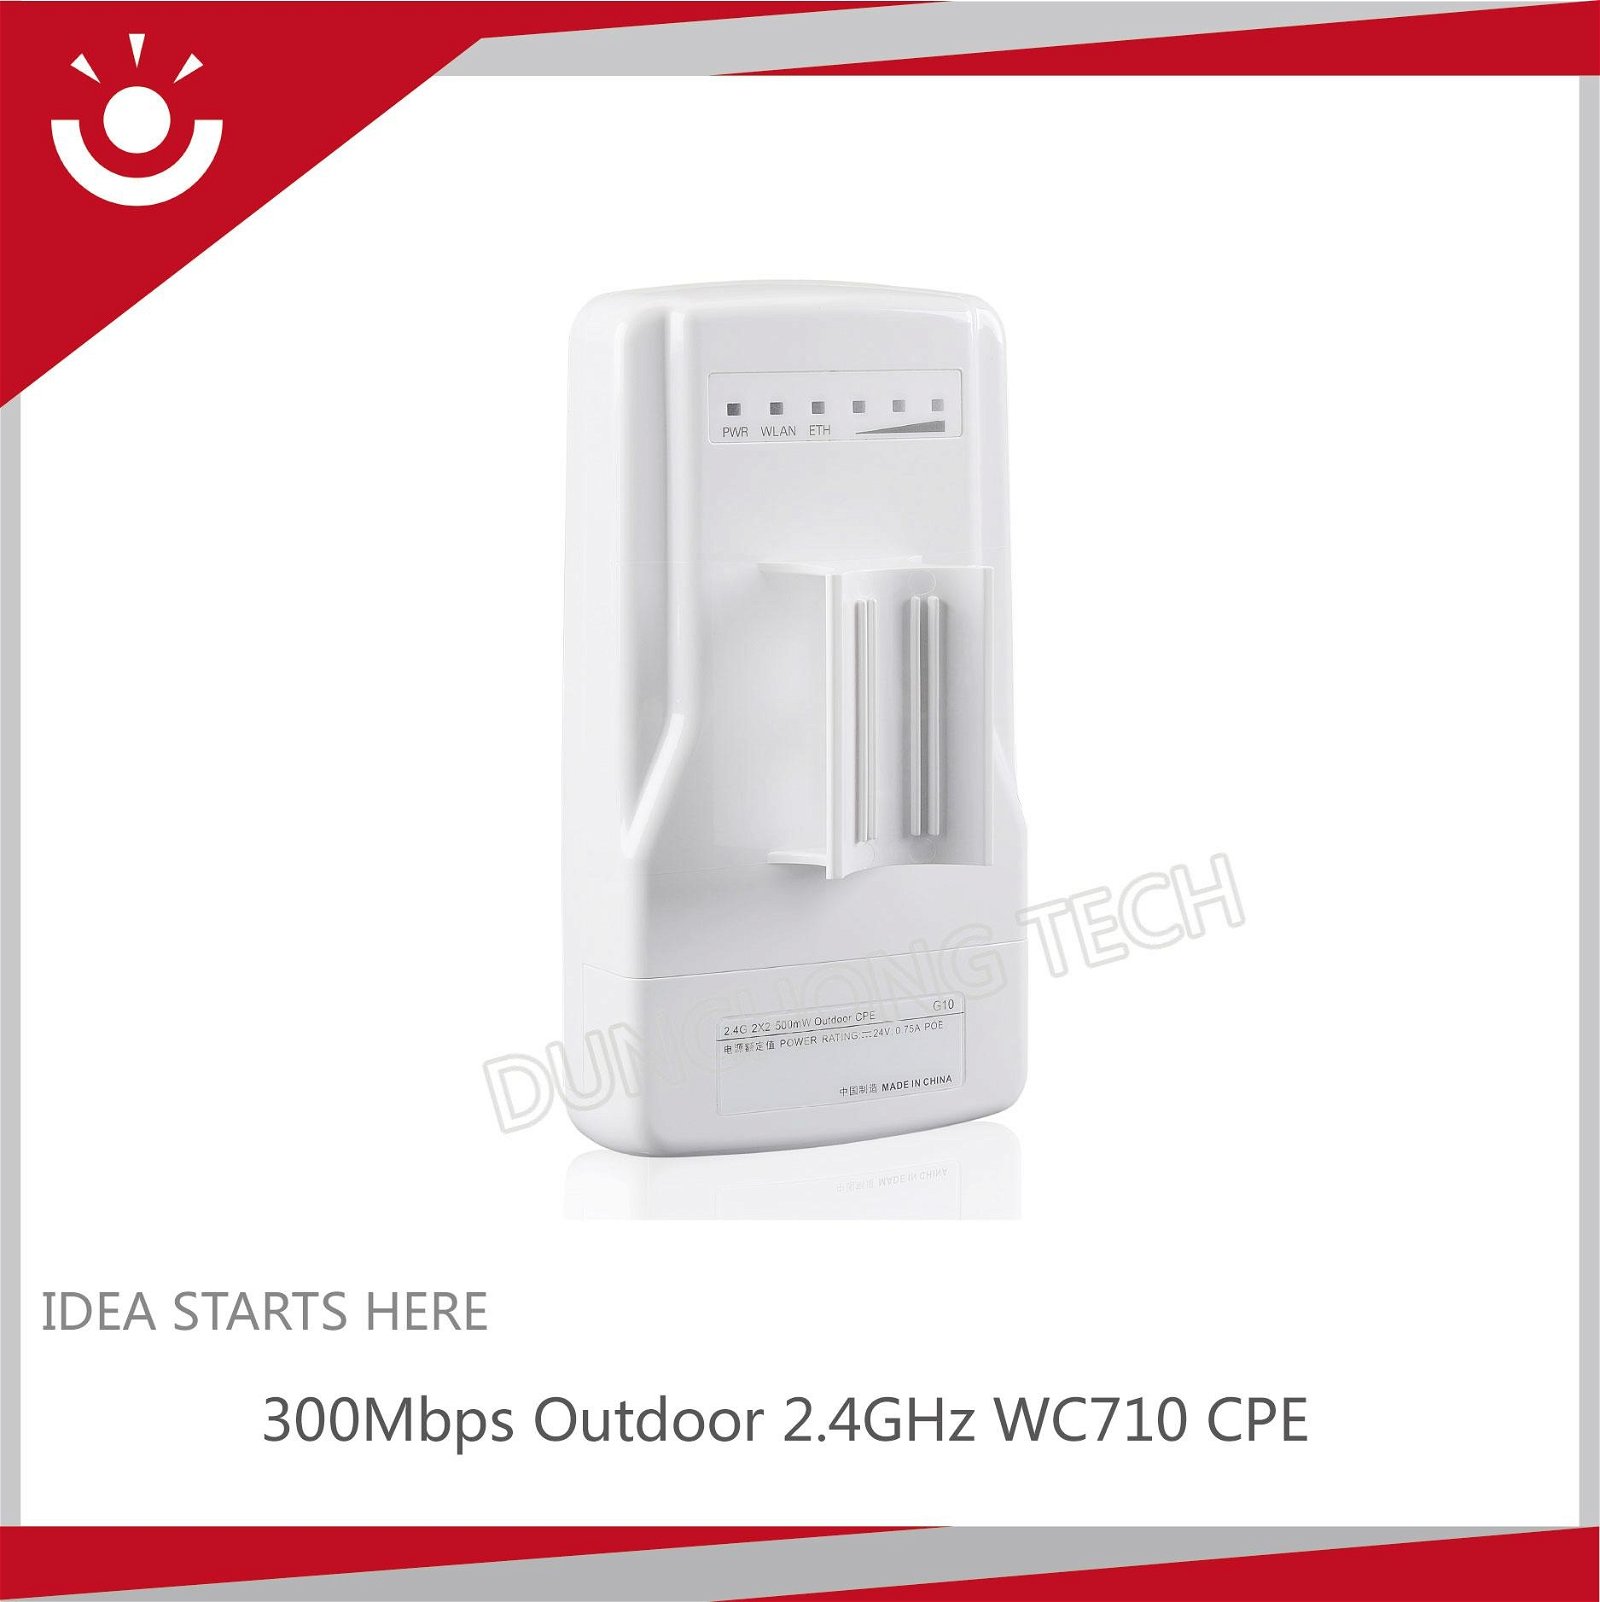 2.4GHz WC710 Outdoor Wireless Access Point CPE Bridge like wireless modem 2